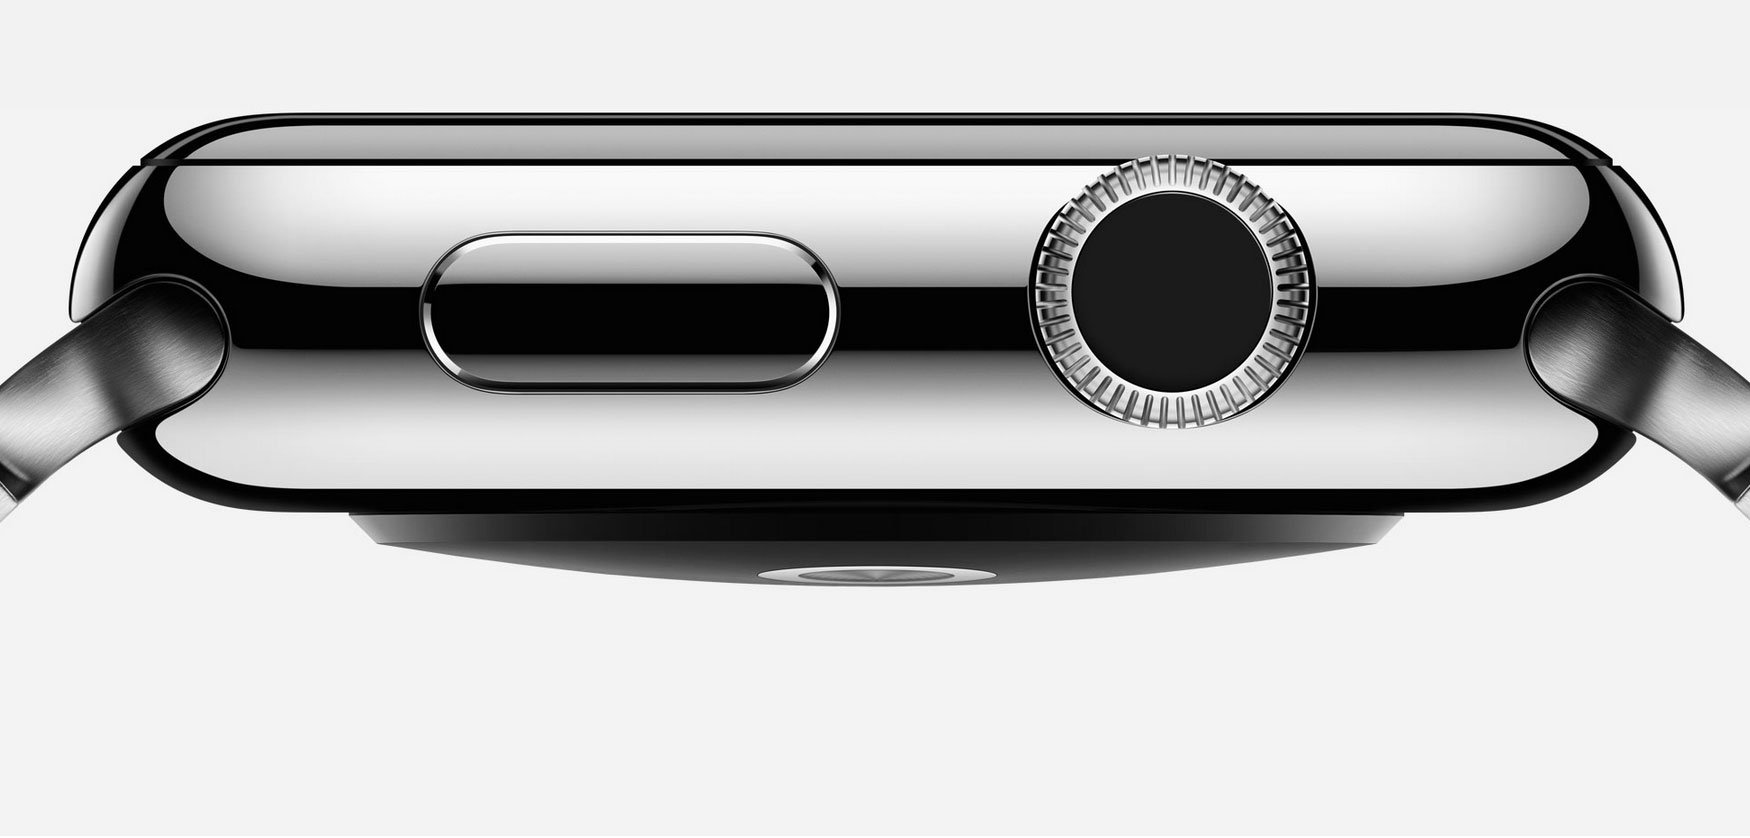 Wann kommt die Apple Watch: Apple Uhr Release im Frühling 2015! 6